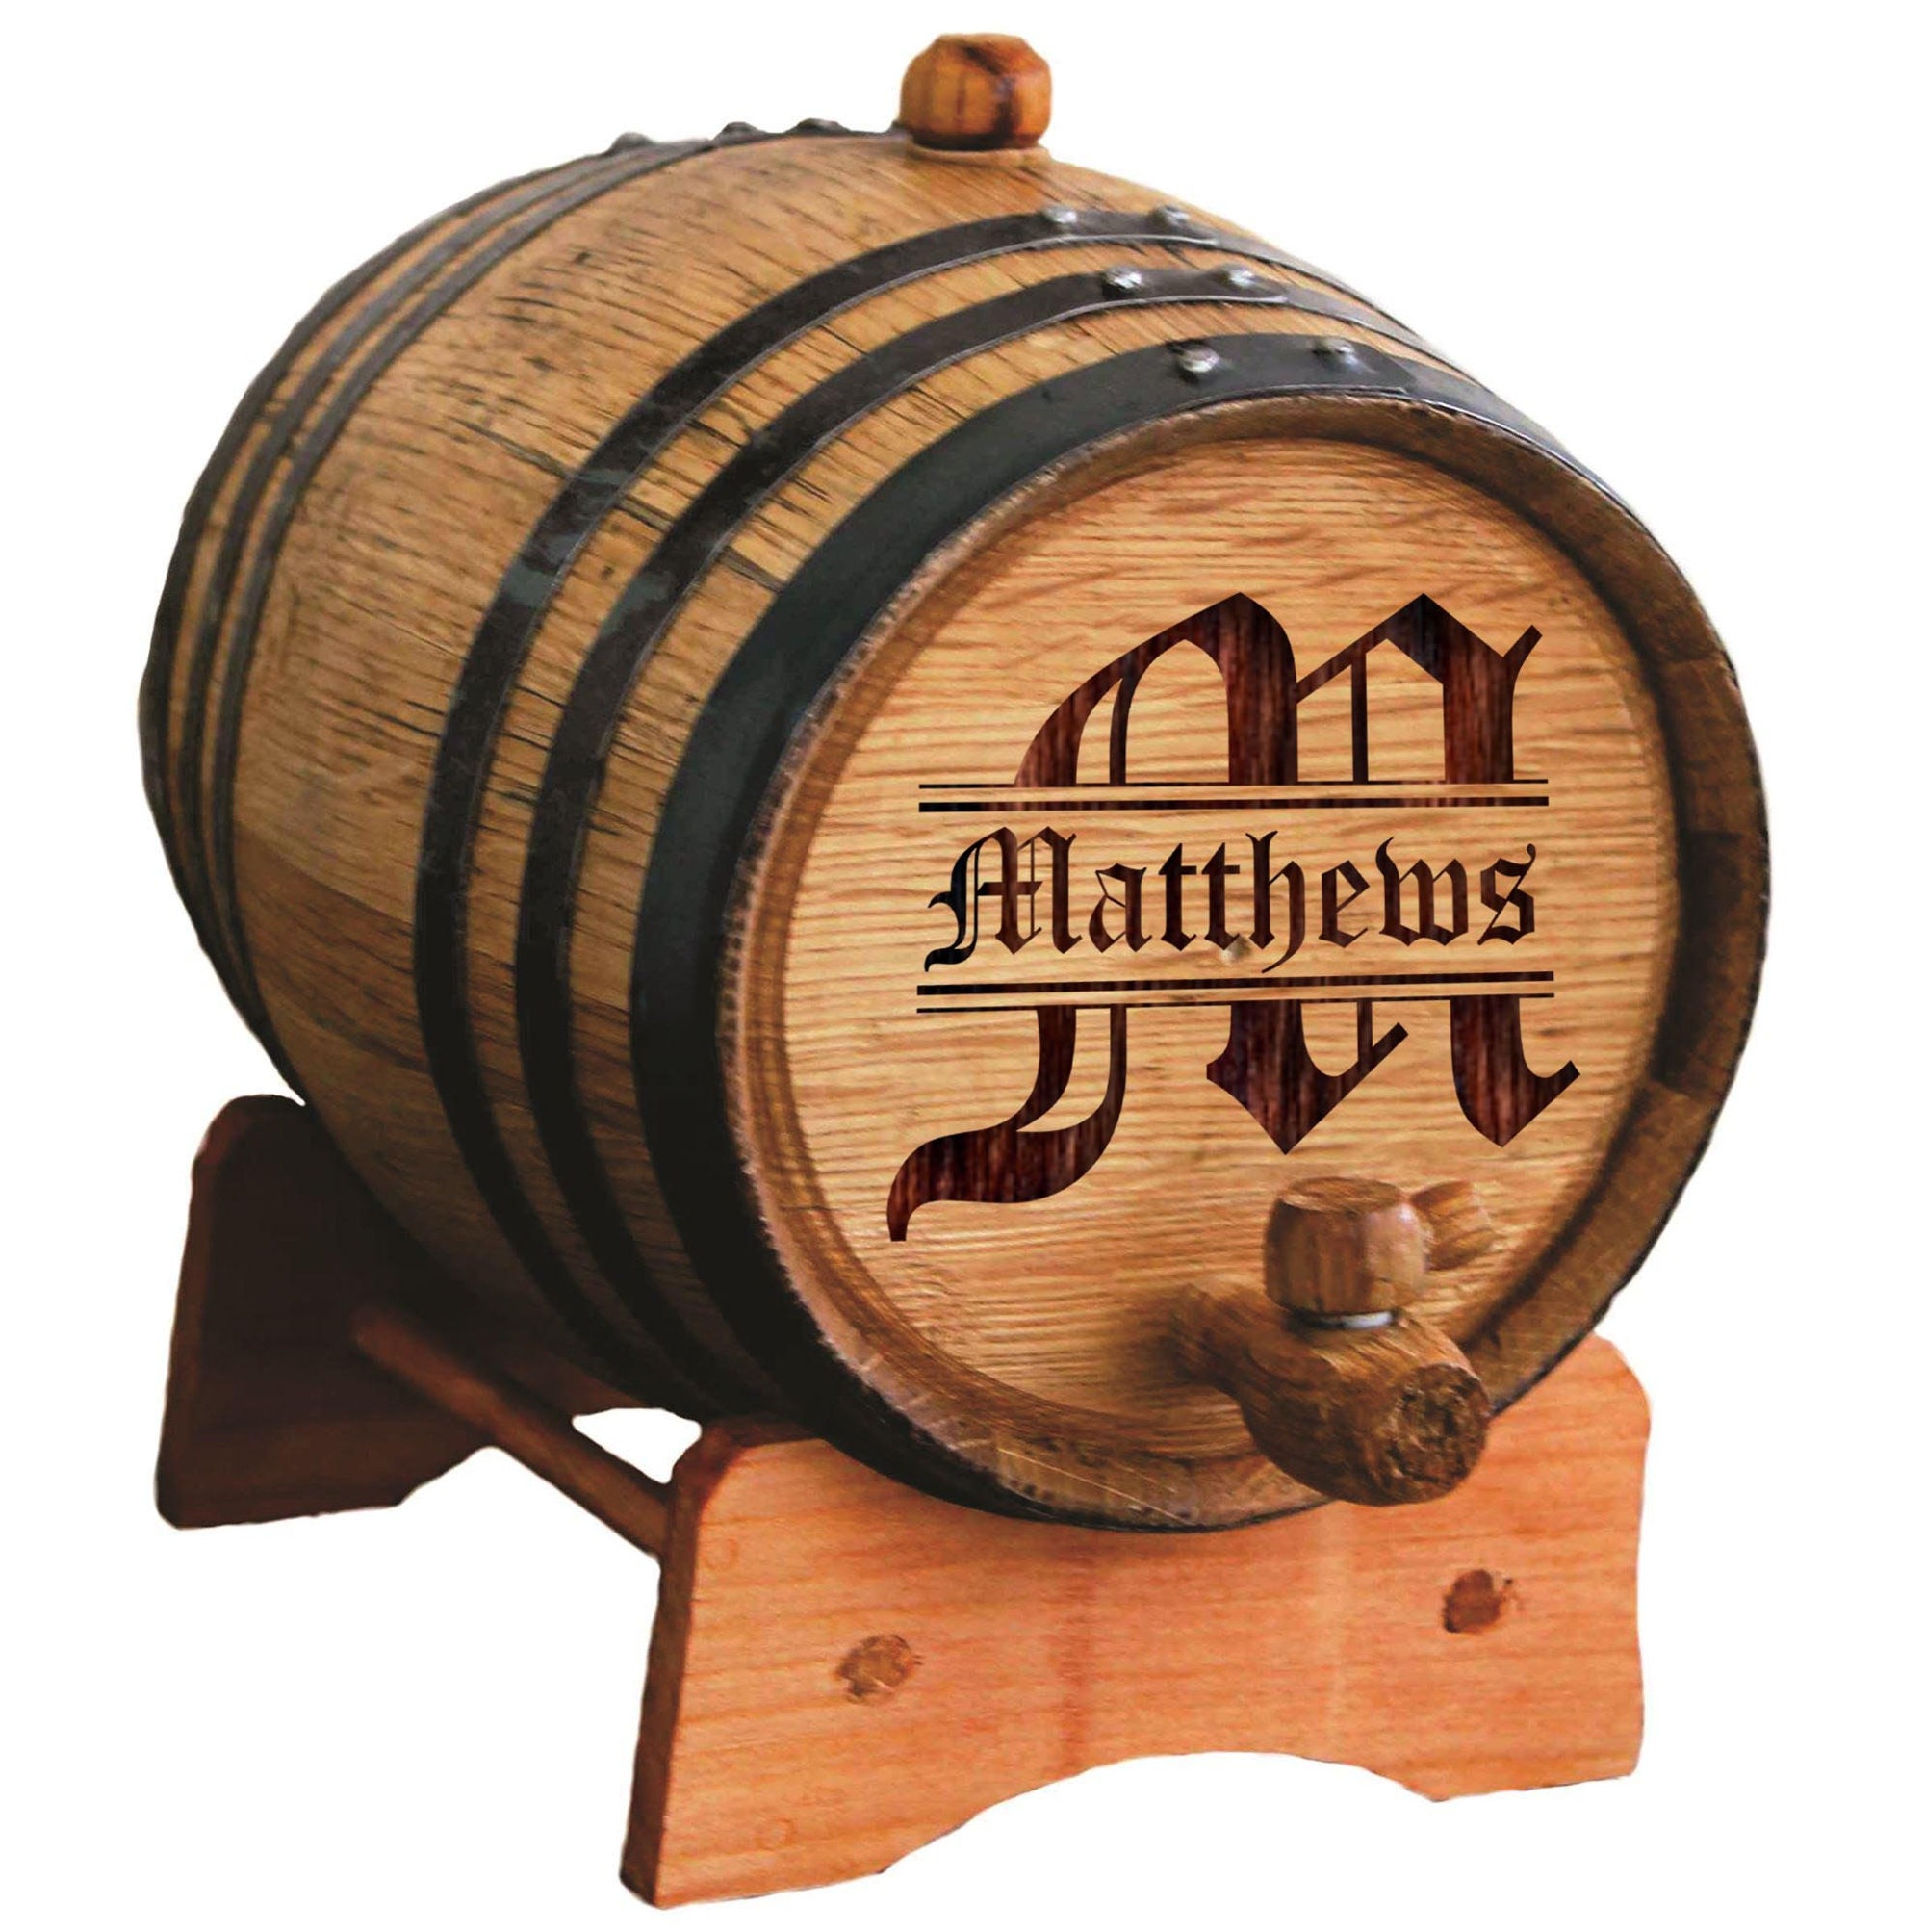 pirate whiskey barrel engraved whiskey barrel rum barrel 3-4 liter Wooden Bourbon Barrel Personalized whiskey keg Gift for Men